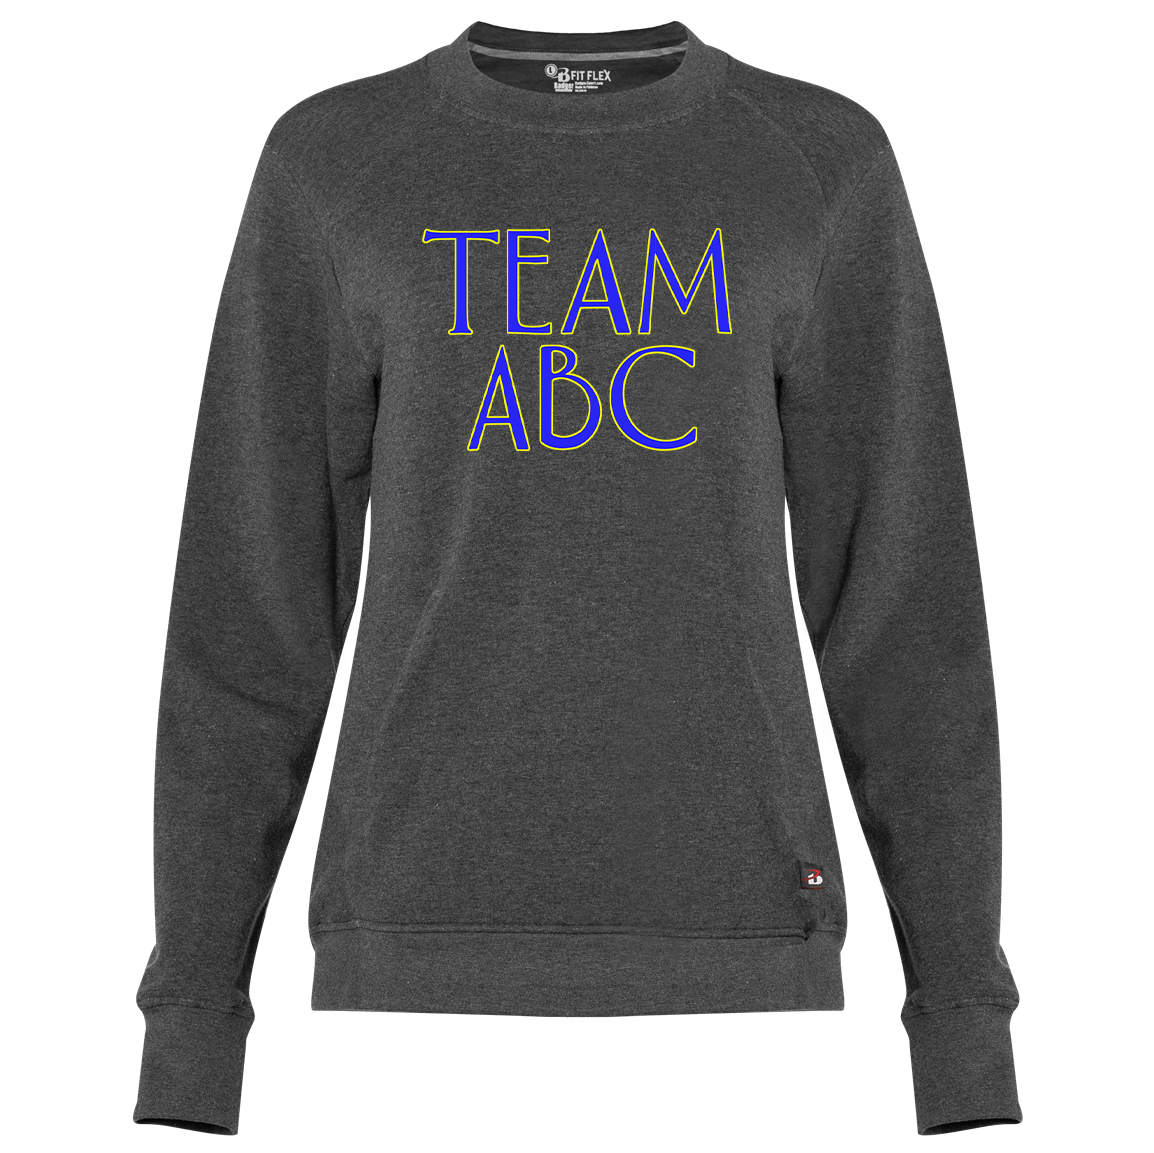 ABC Shoreline Gymnastics Women's Pocket Crew - Team ABC